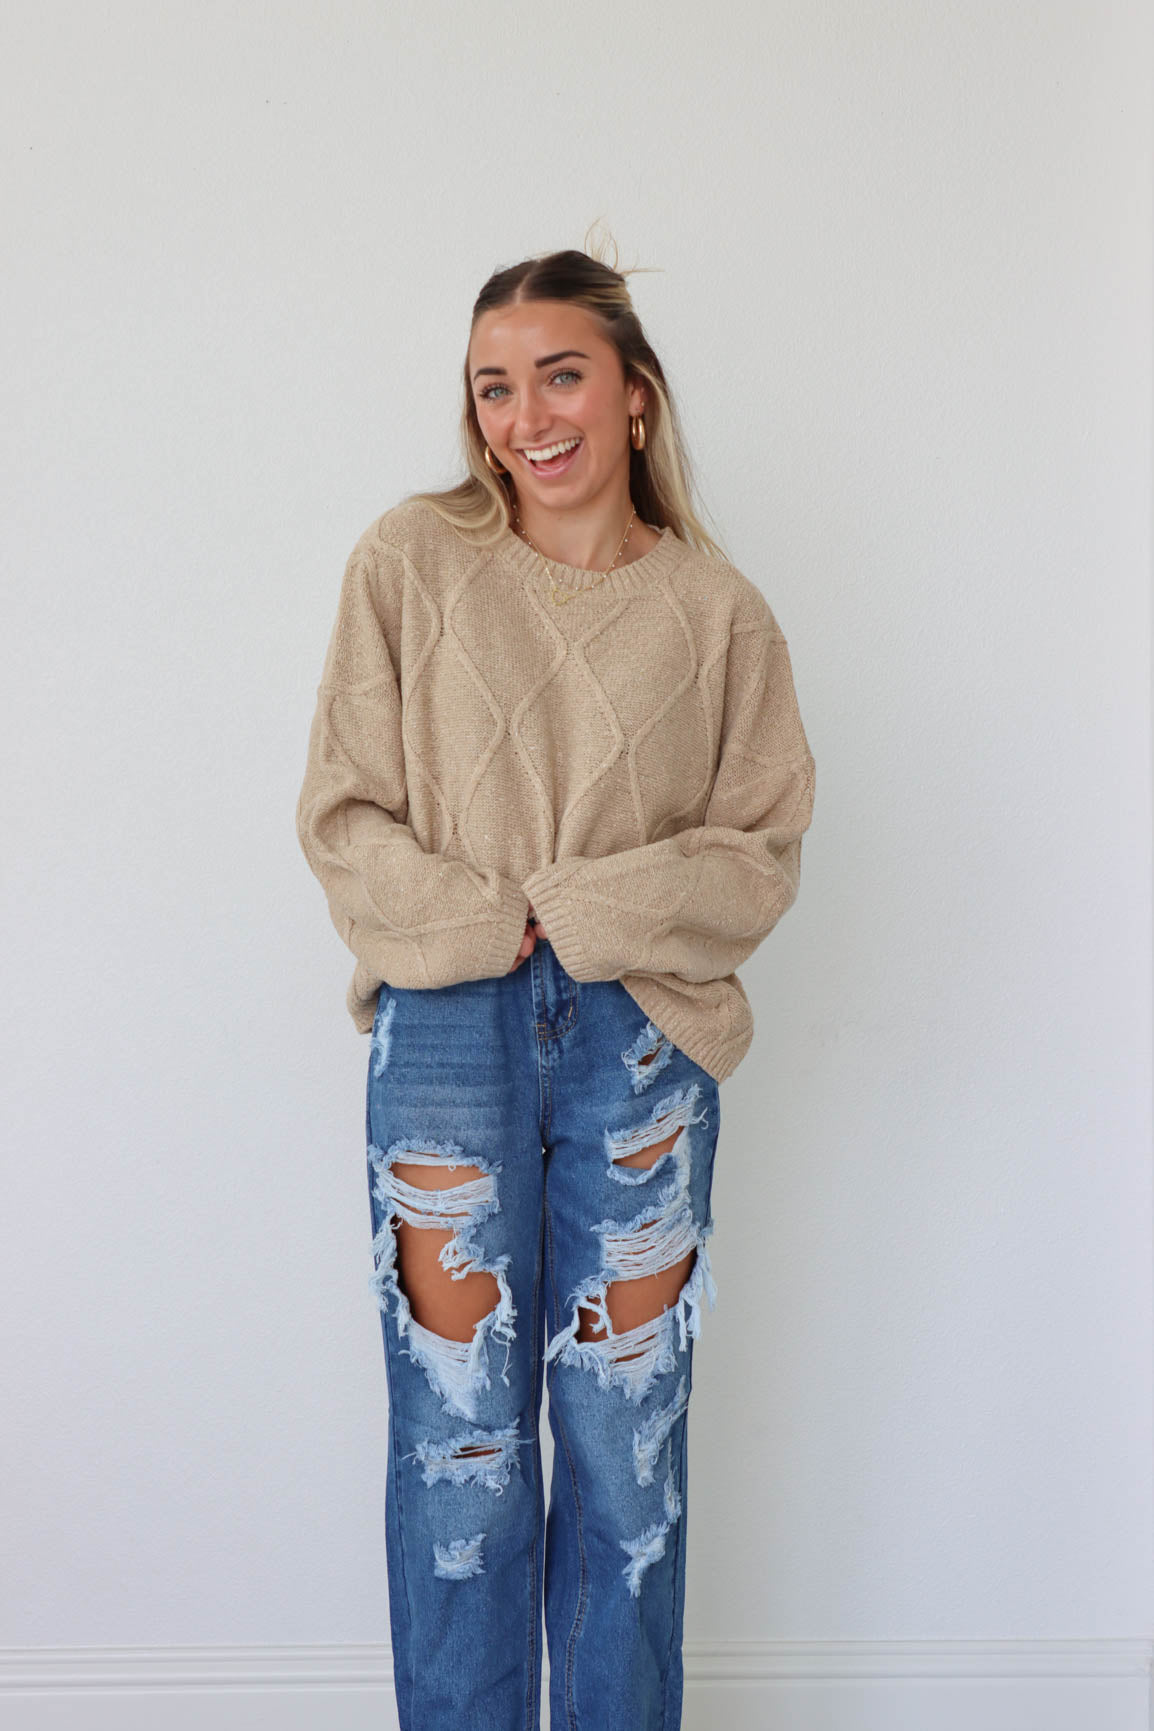 girl wearing tan knit sweater